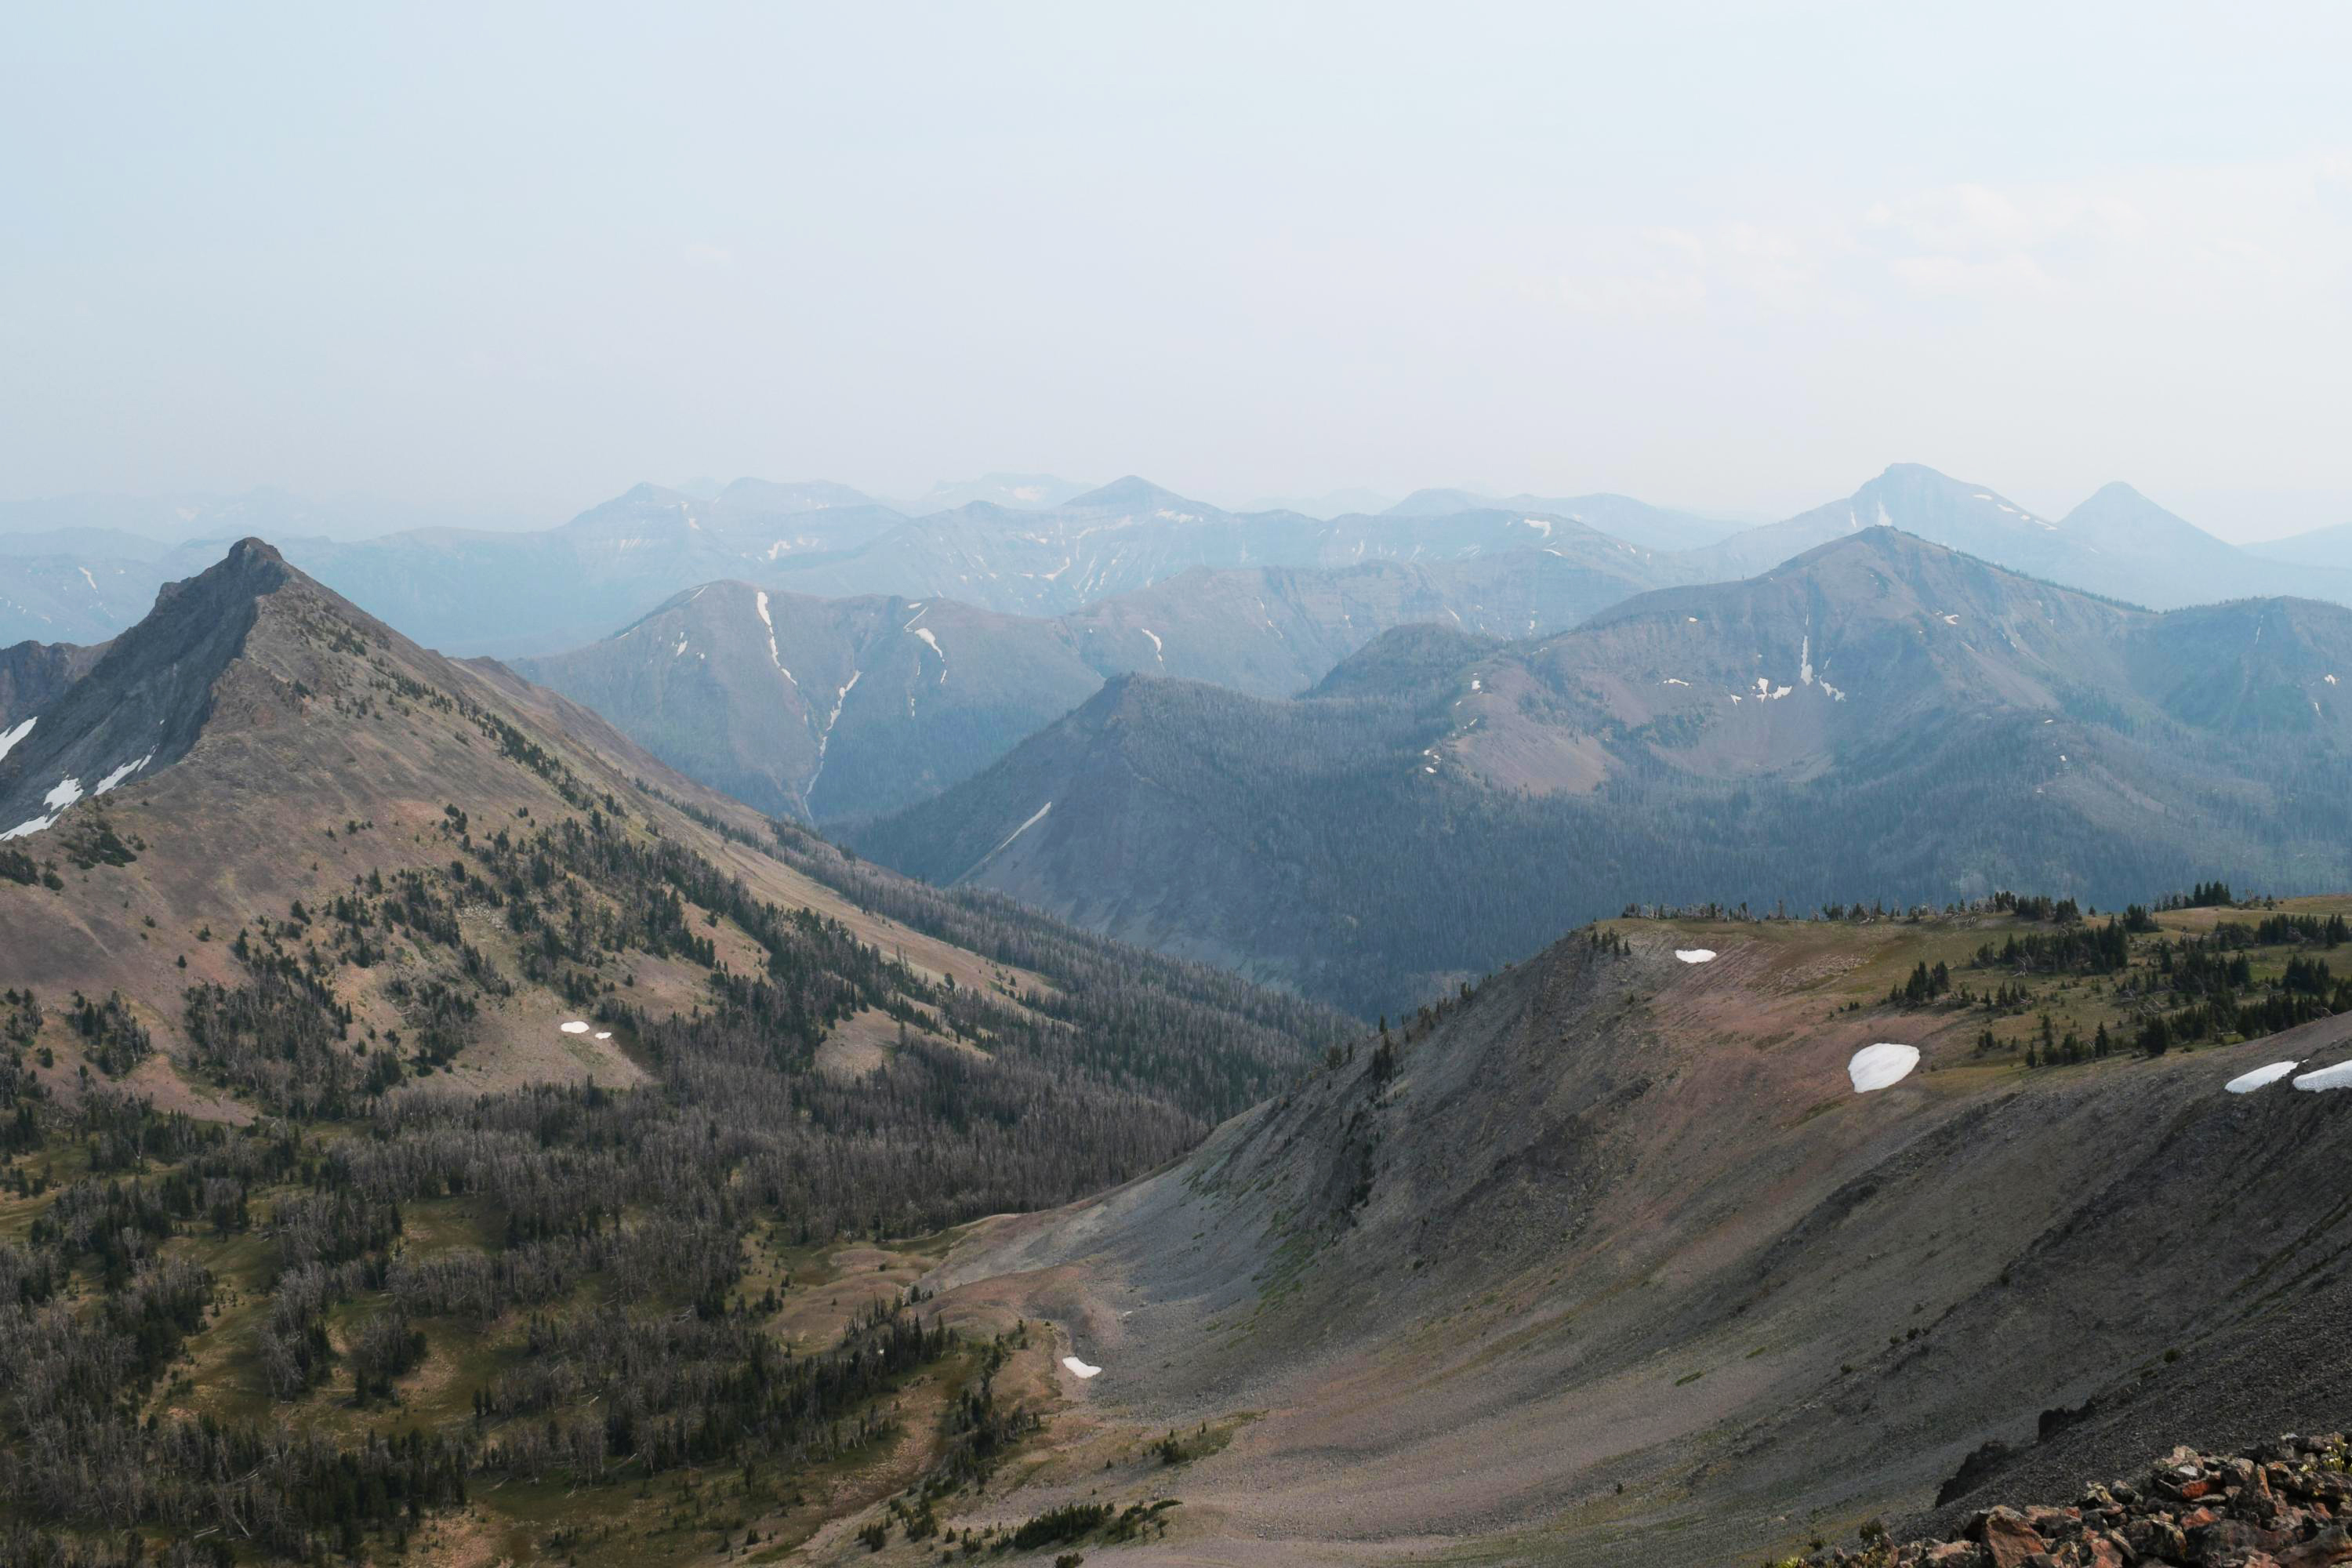 Yellowstone National Park and the Absaroka Range via Avalanche Peak summit, July 2021 (Jess Hunt-Ralston, Georgia Tech)